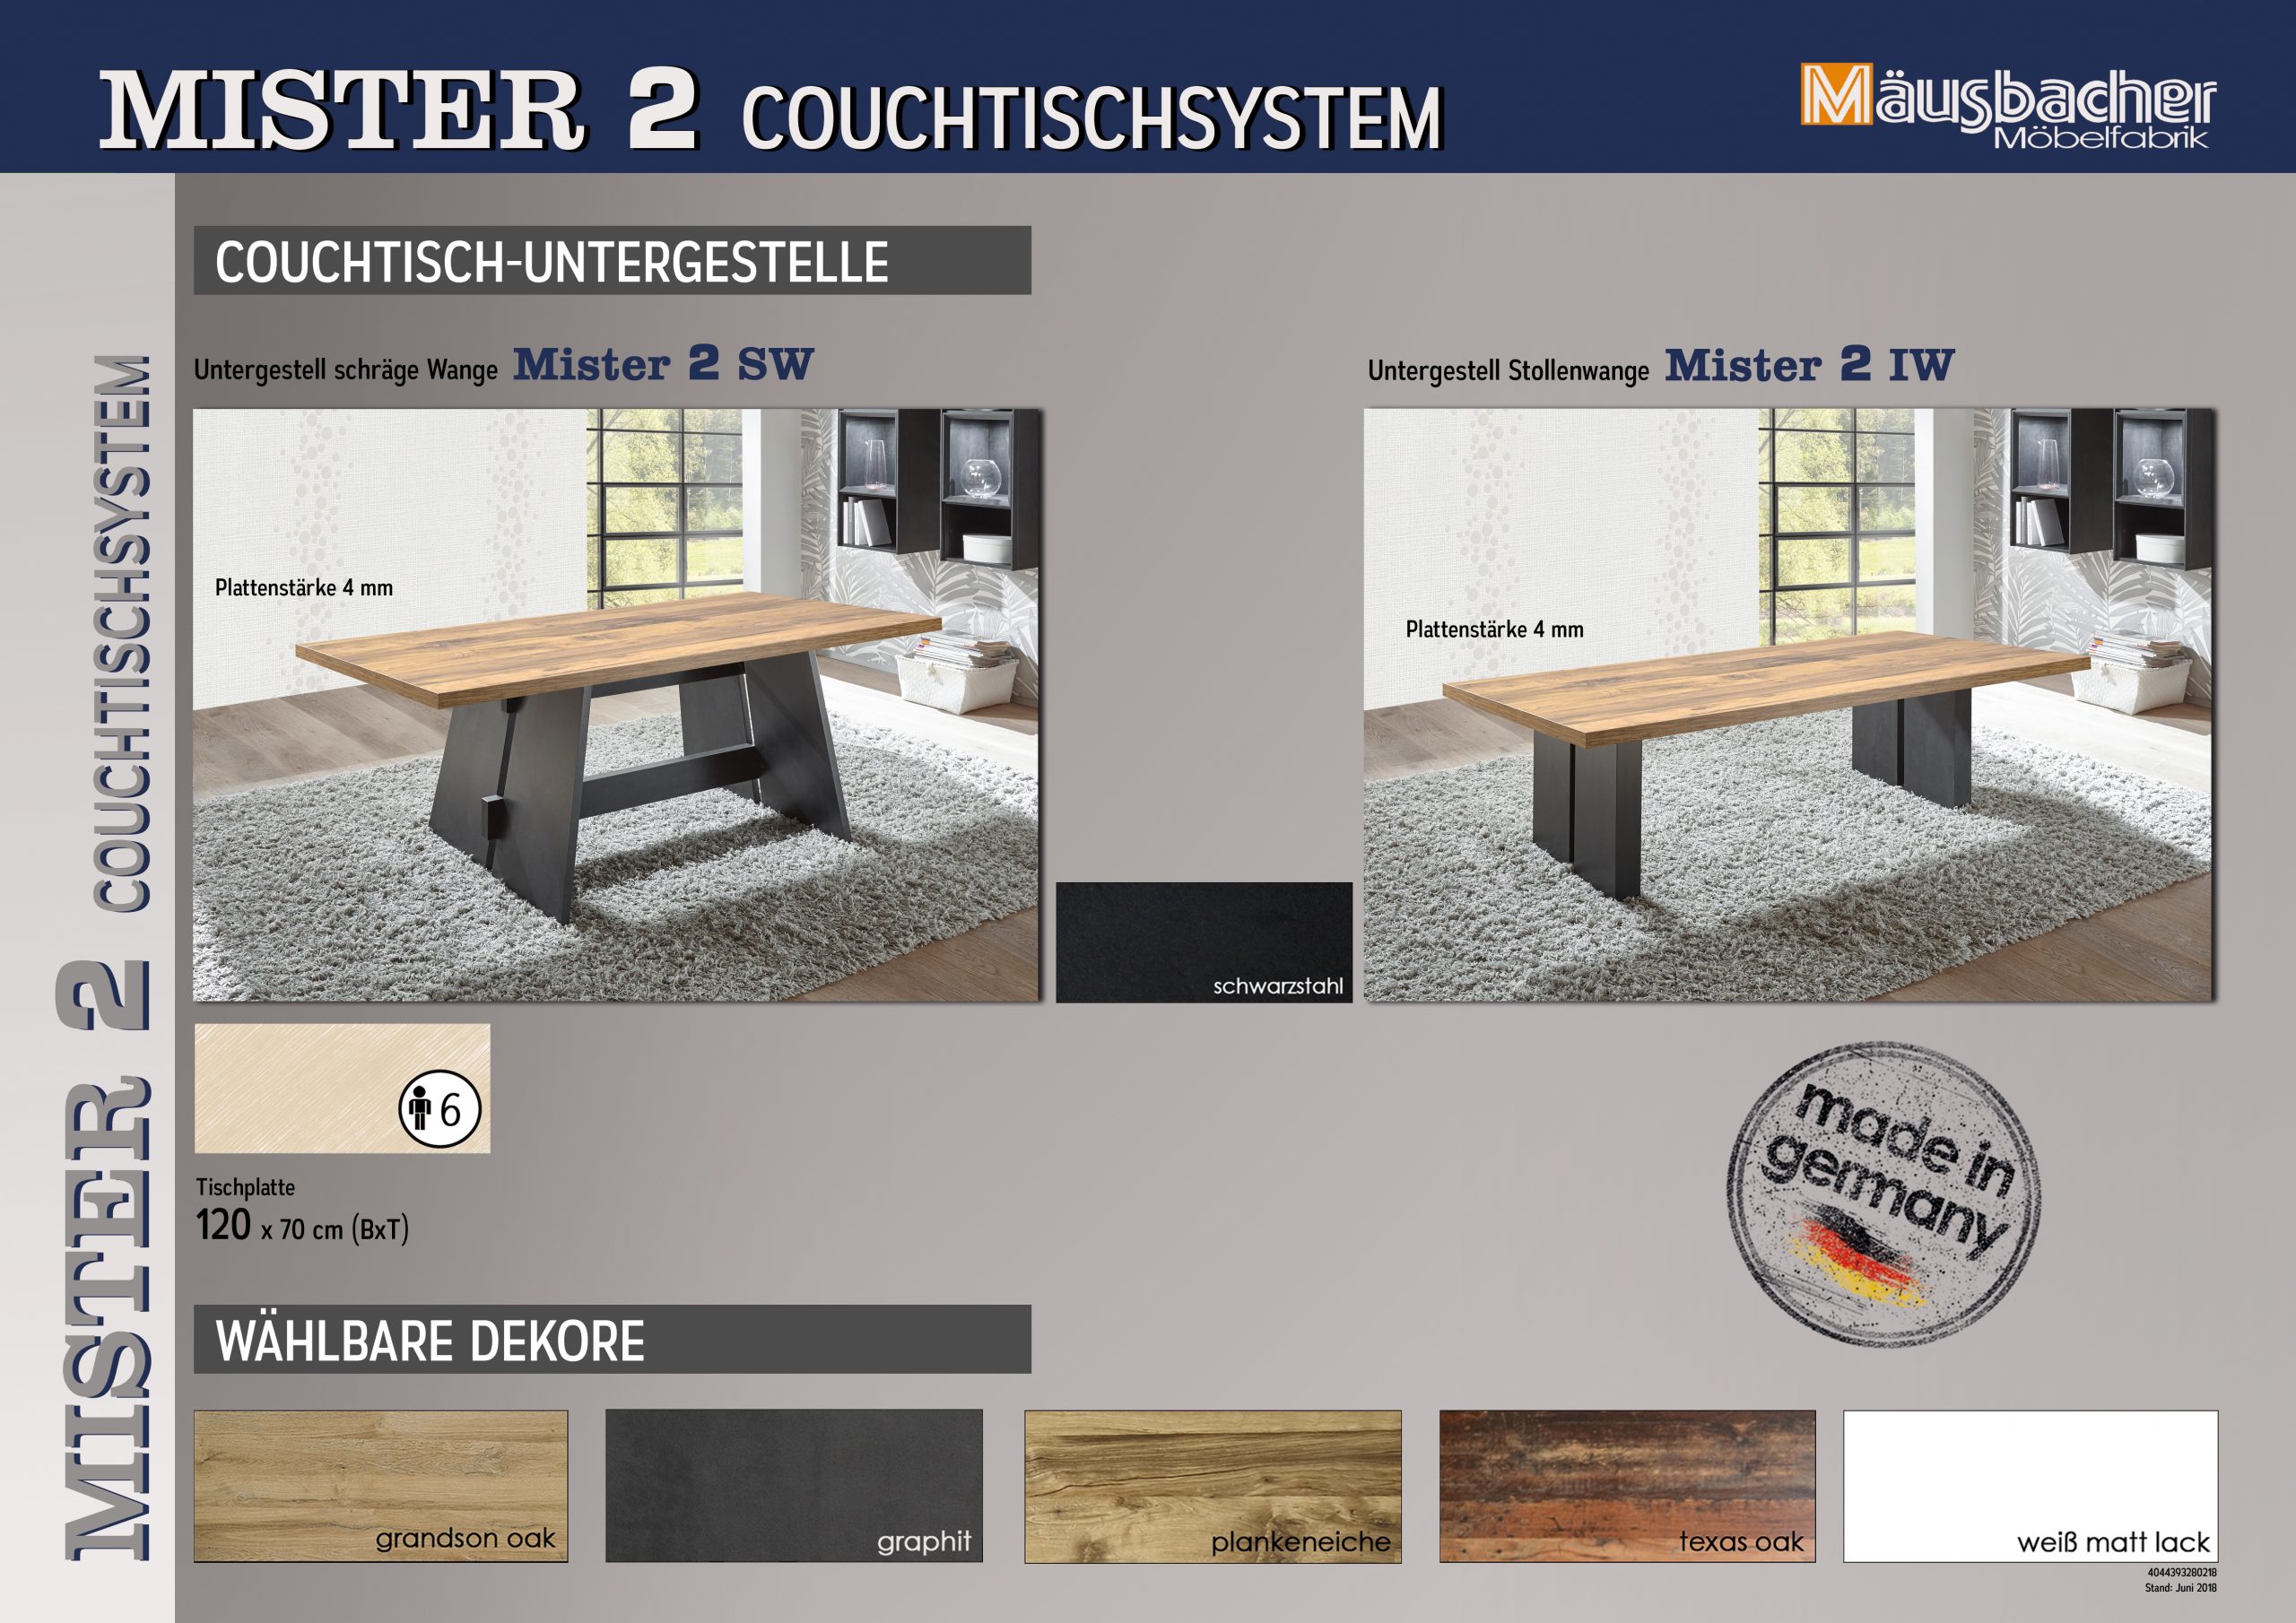 Couchtisch „Mister - made - frei by konfigurierbar Möbis in Germany and Lukas“ « More Mäusbacher